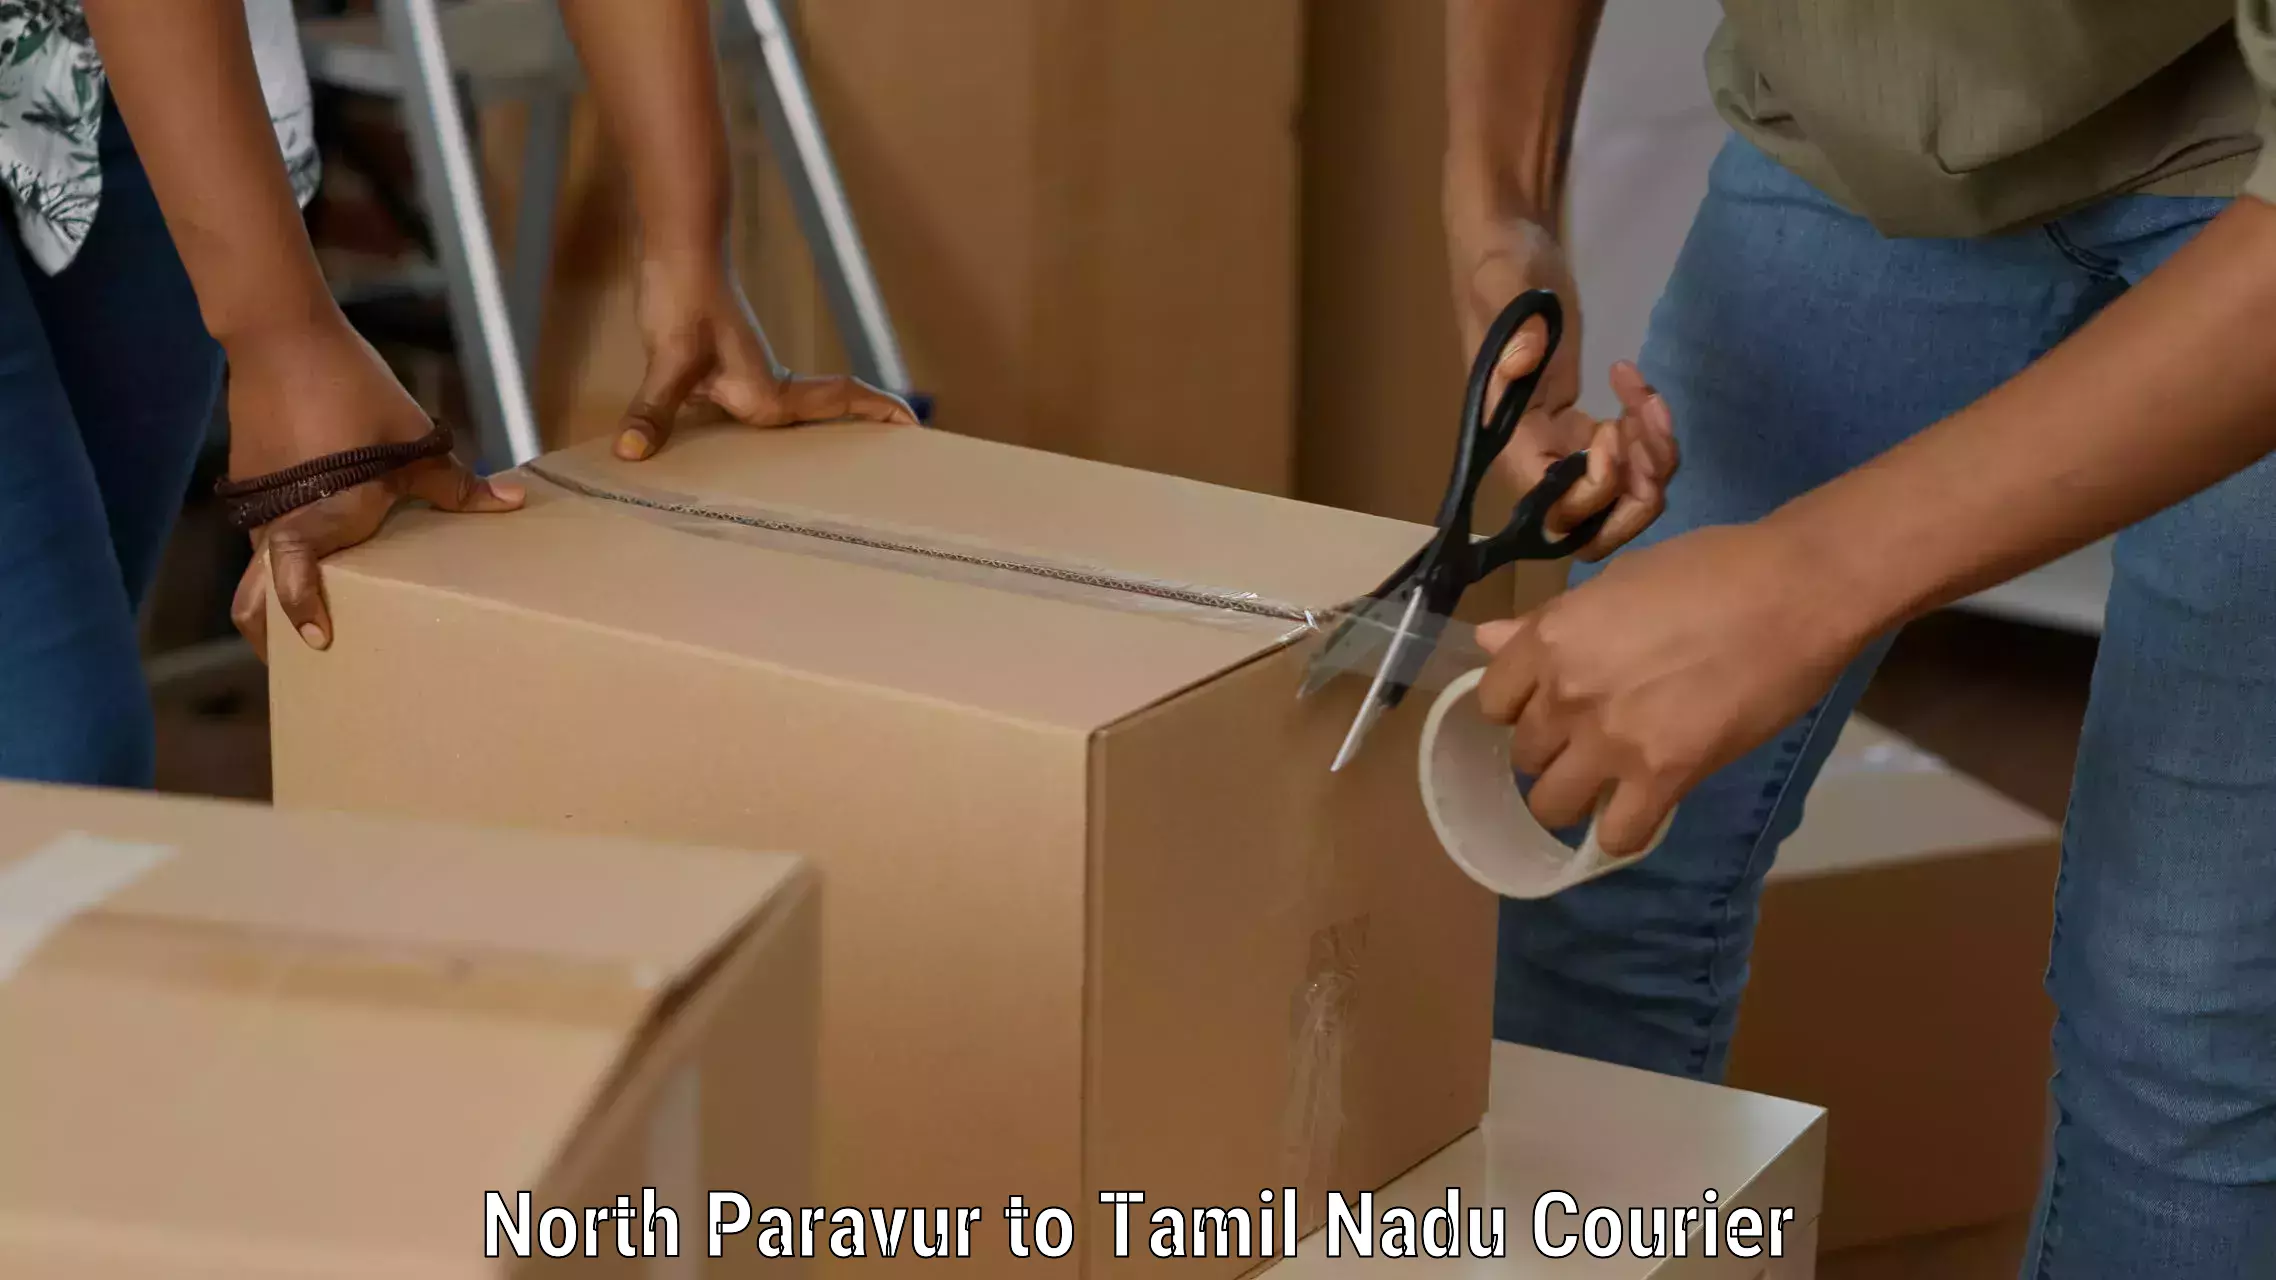 Personal courier services North Paravur to Vilathikulam